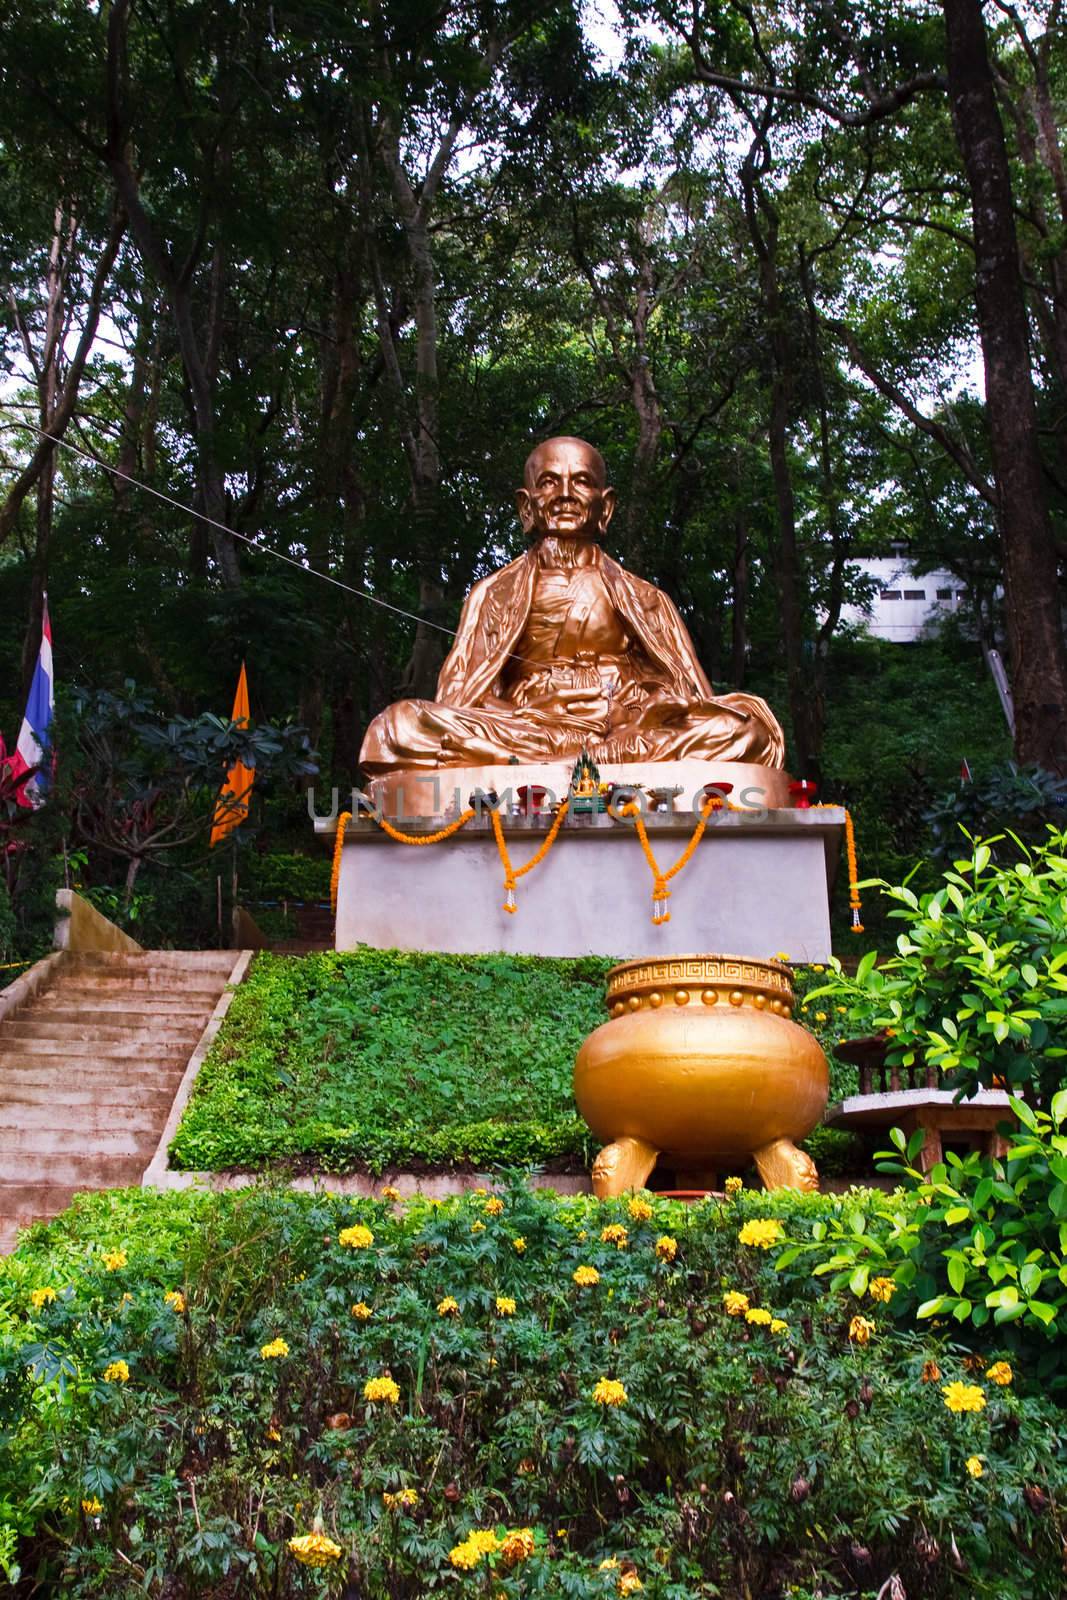 Monk " Kruba Siwichai image" on Doi Suthep Mountain, ChaingMai